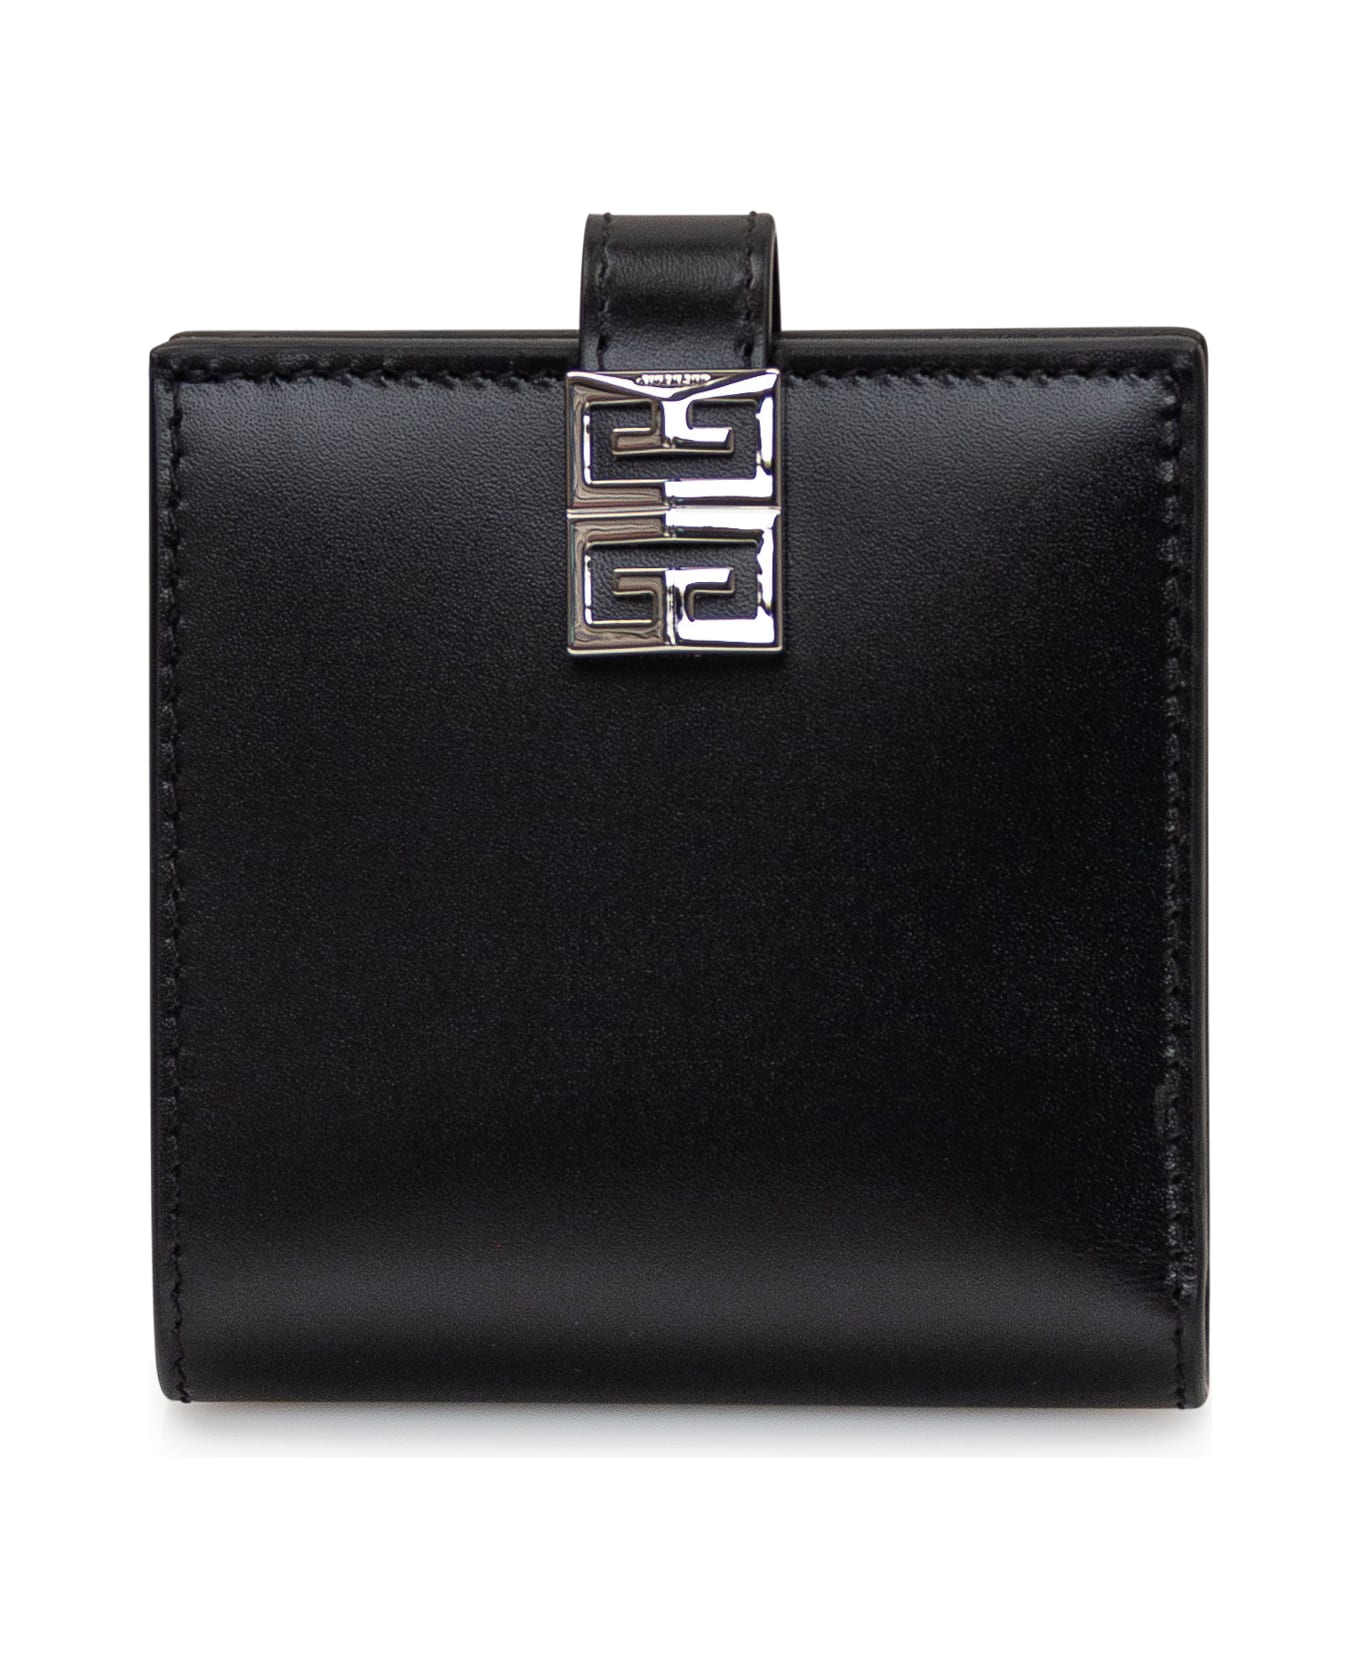 Givenchy 4g Card Holder - BLACK 財布